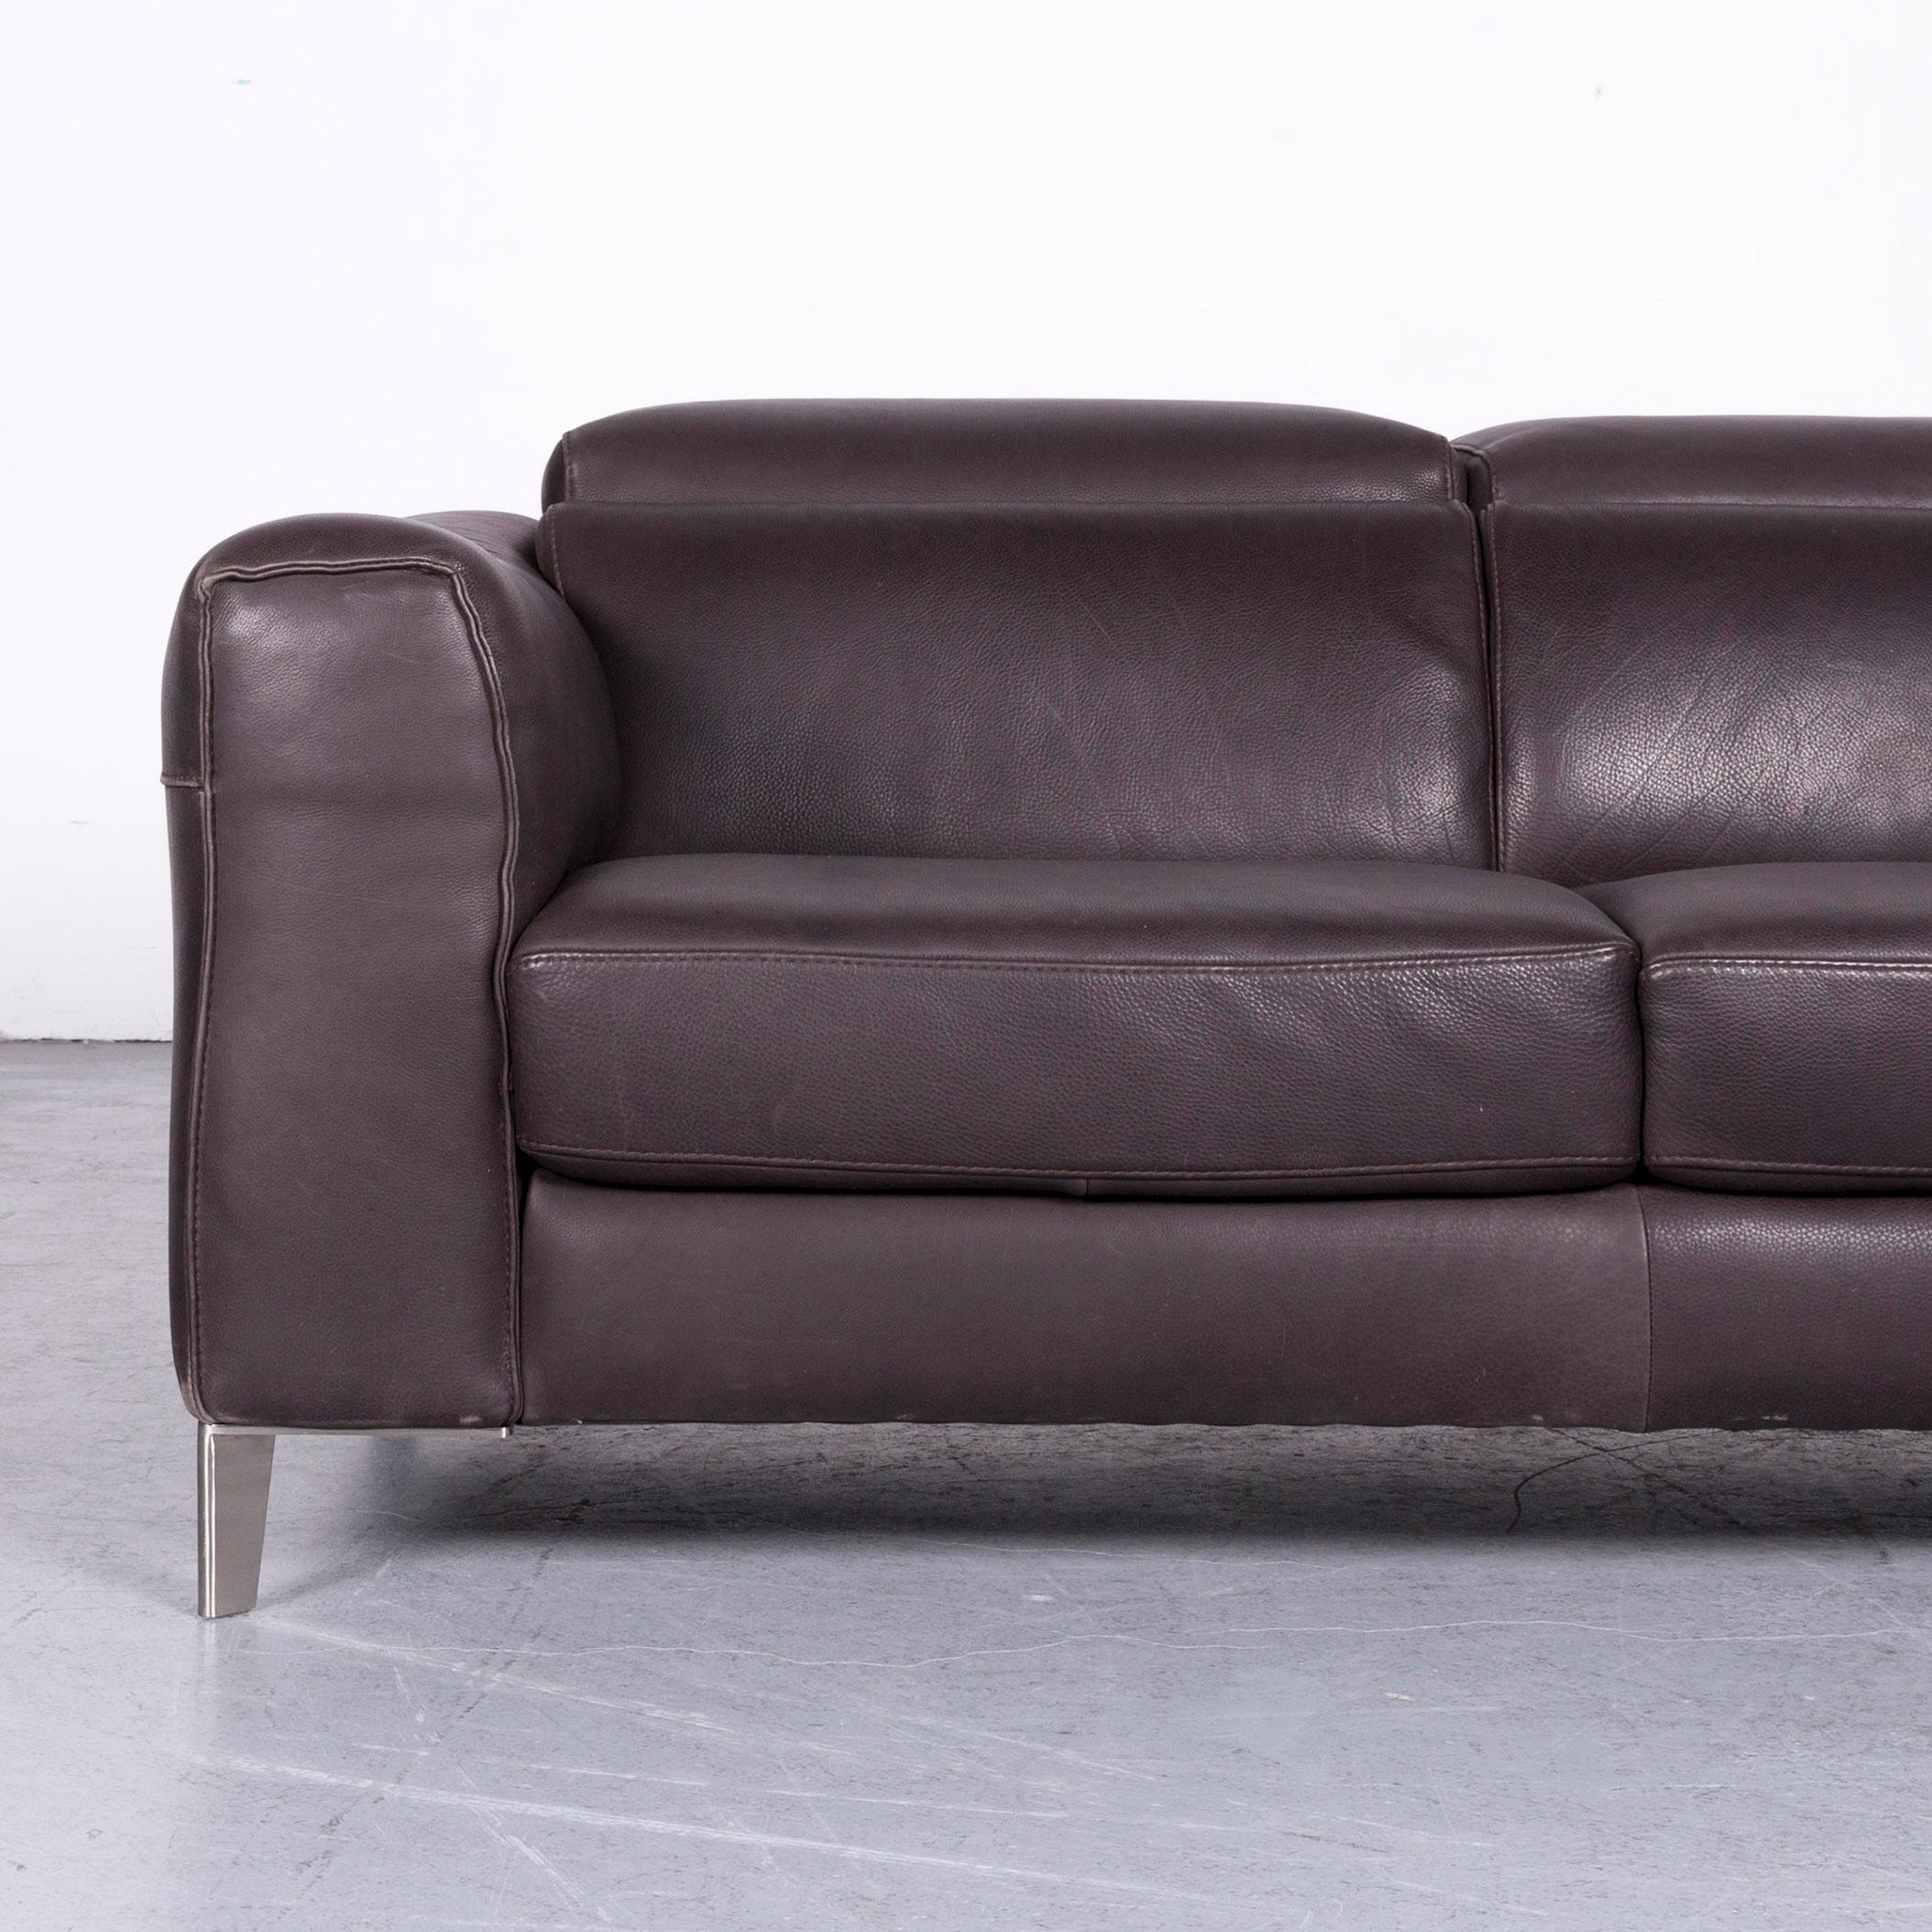 European Natuzzi Designer Leather Sofa Two-Seat Couch Brown